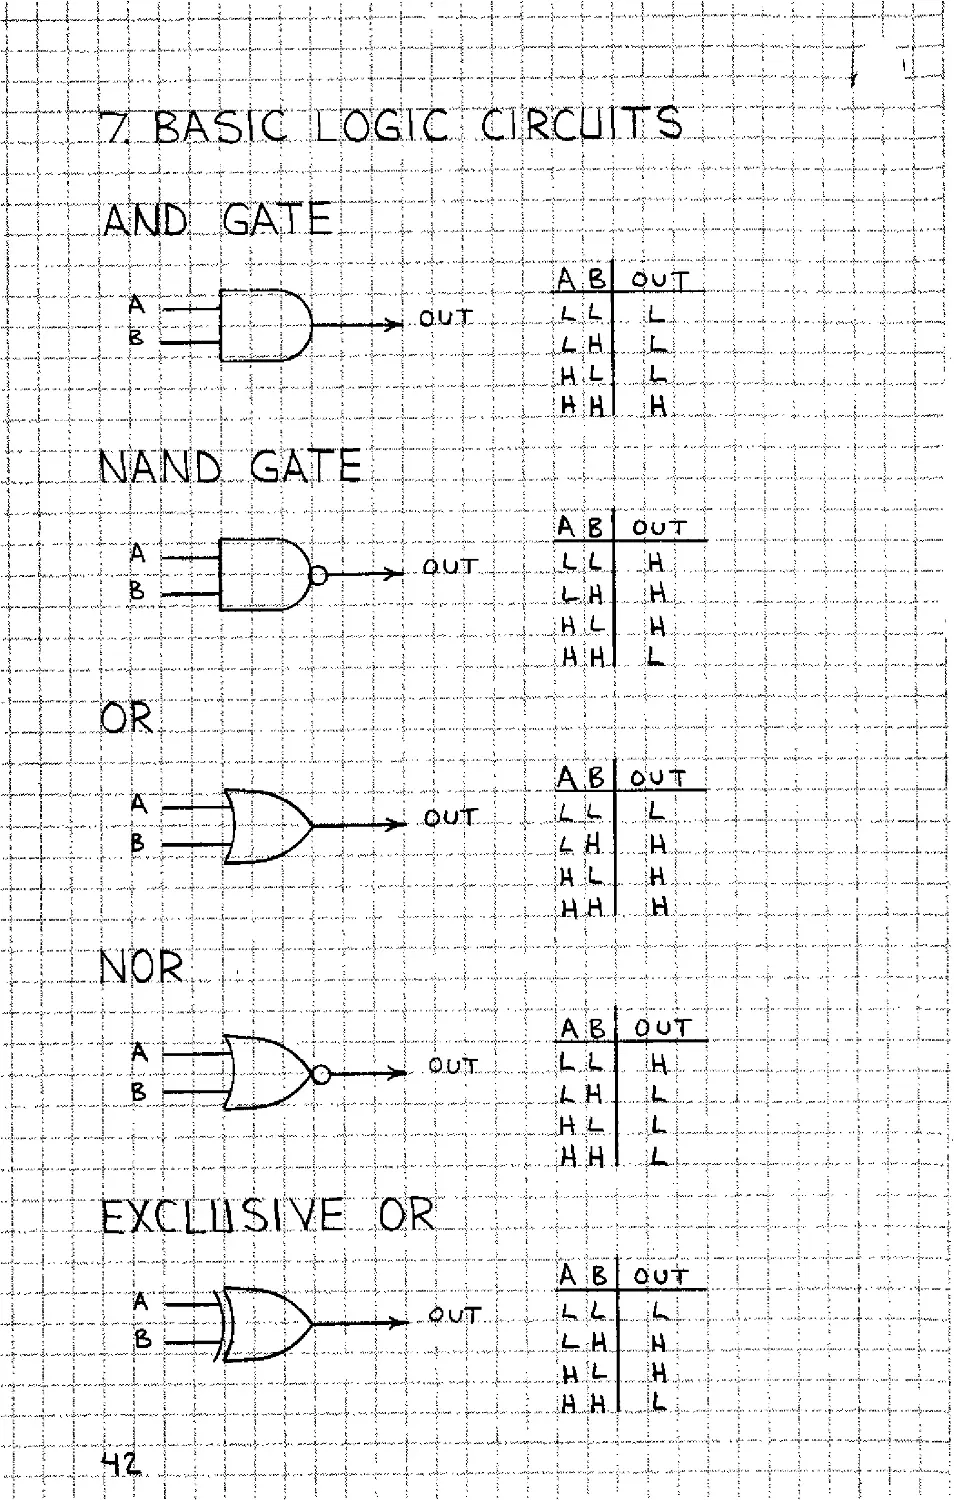 7. Basic logic circuits